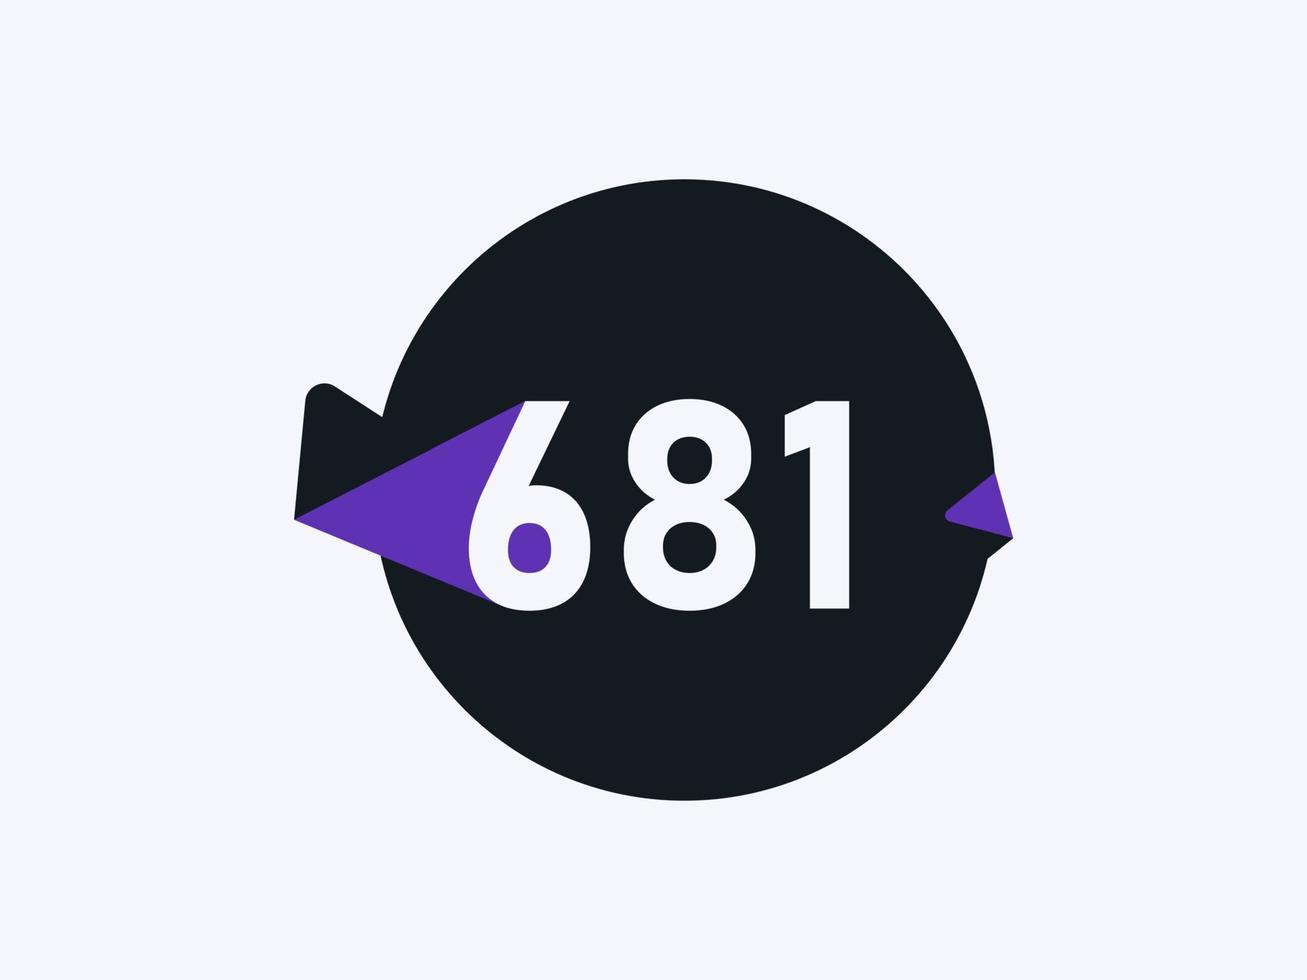 681 Number logo icon design vector image. Number logo icon design vector image